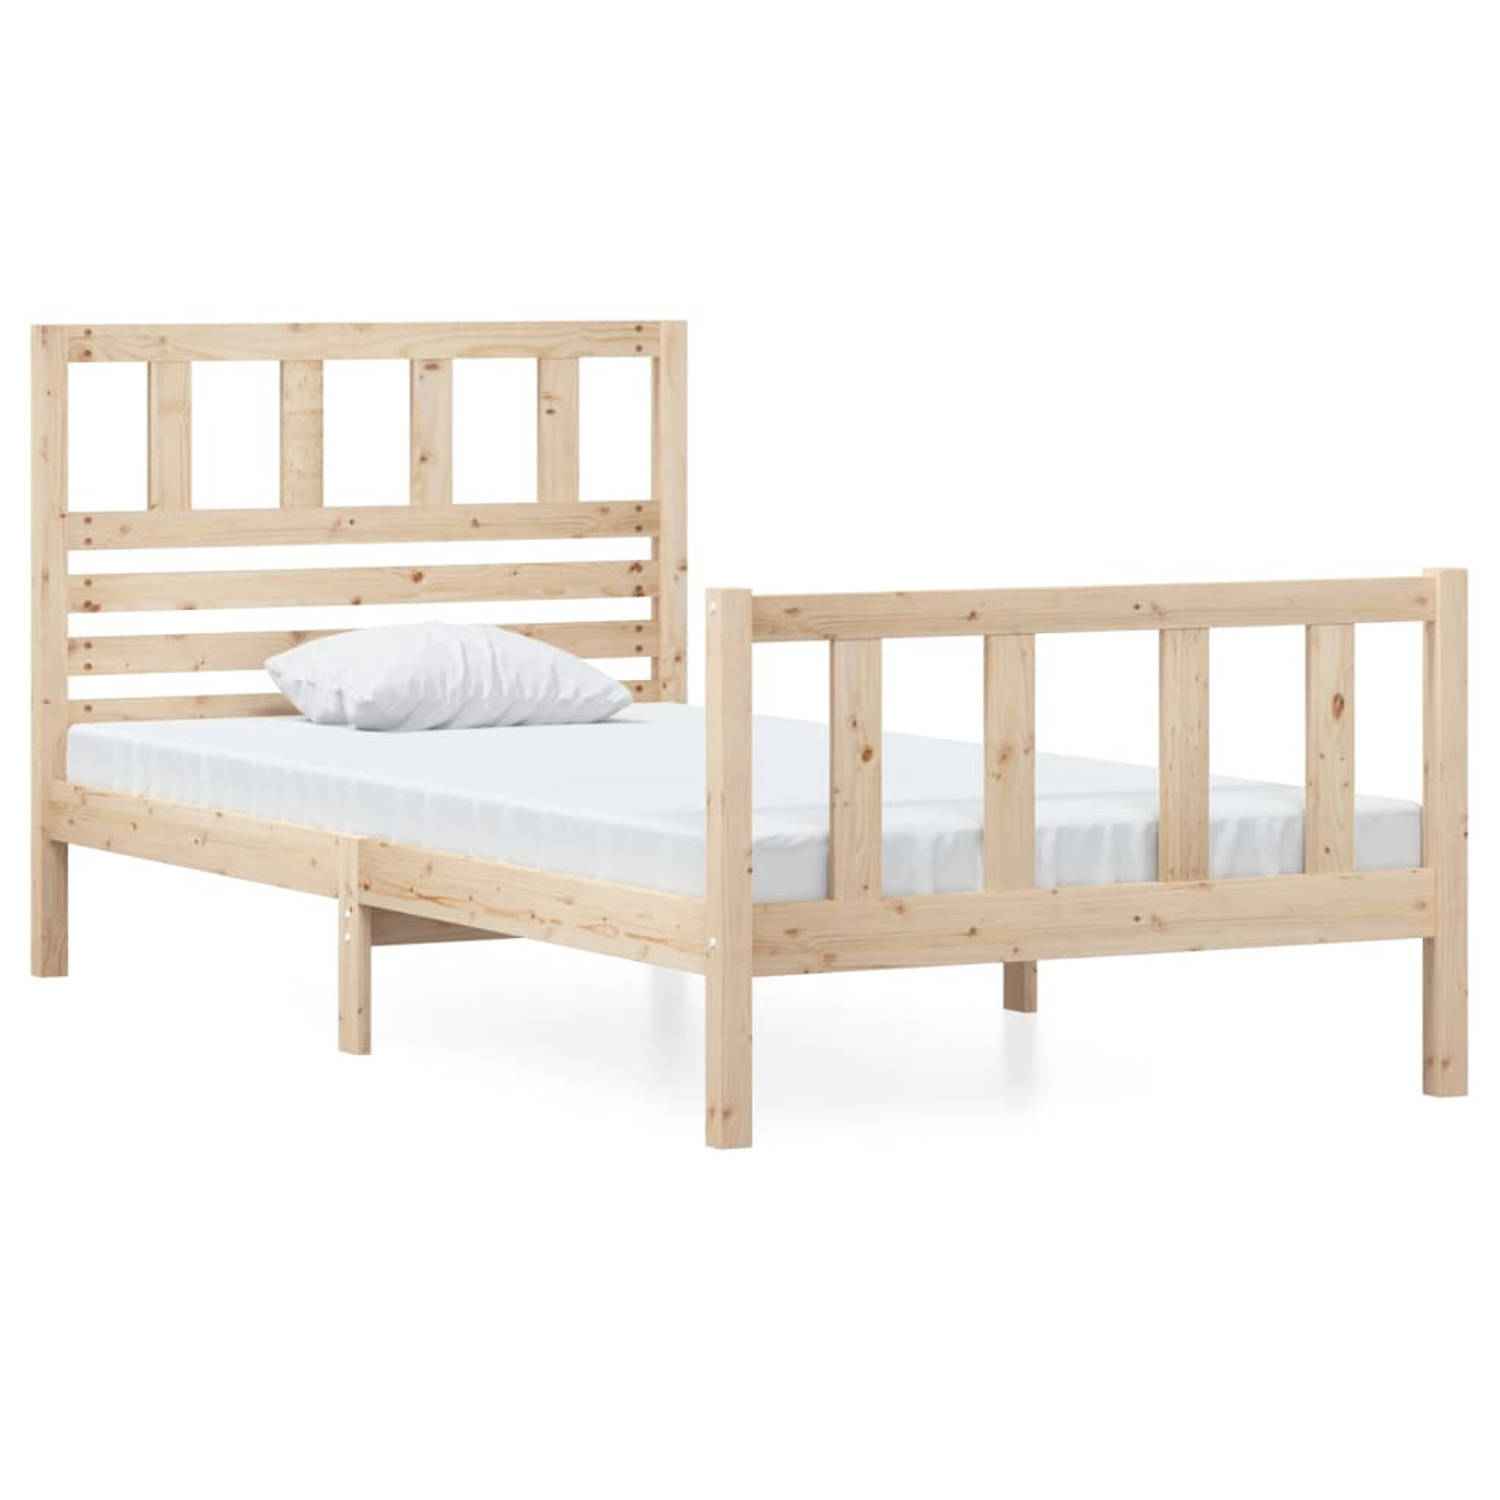 The Living Store Bedframe massief hout 90x200 cm - Bedframe - Bedframes - Eenpersoonsbed - Bed - Bedombouw - Frame - Bed Frame - Ledikant - Bedframe Met Hoofdeinde - Eenpersoonsbed